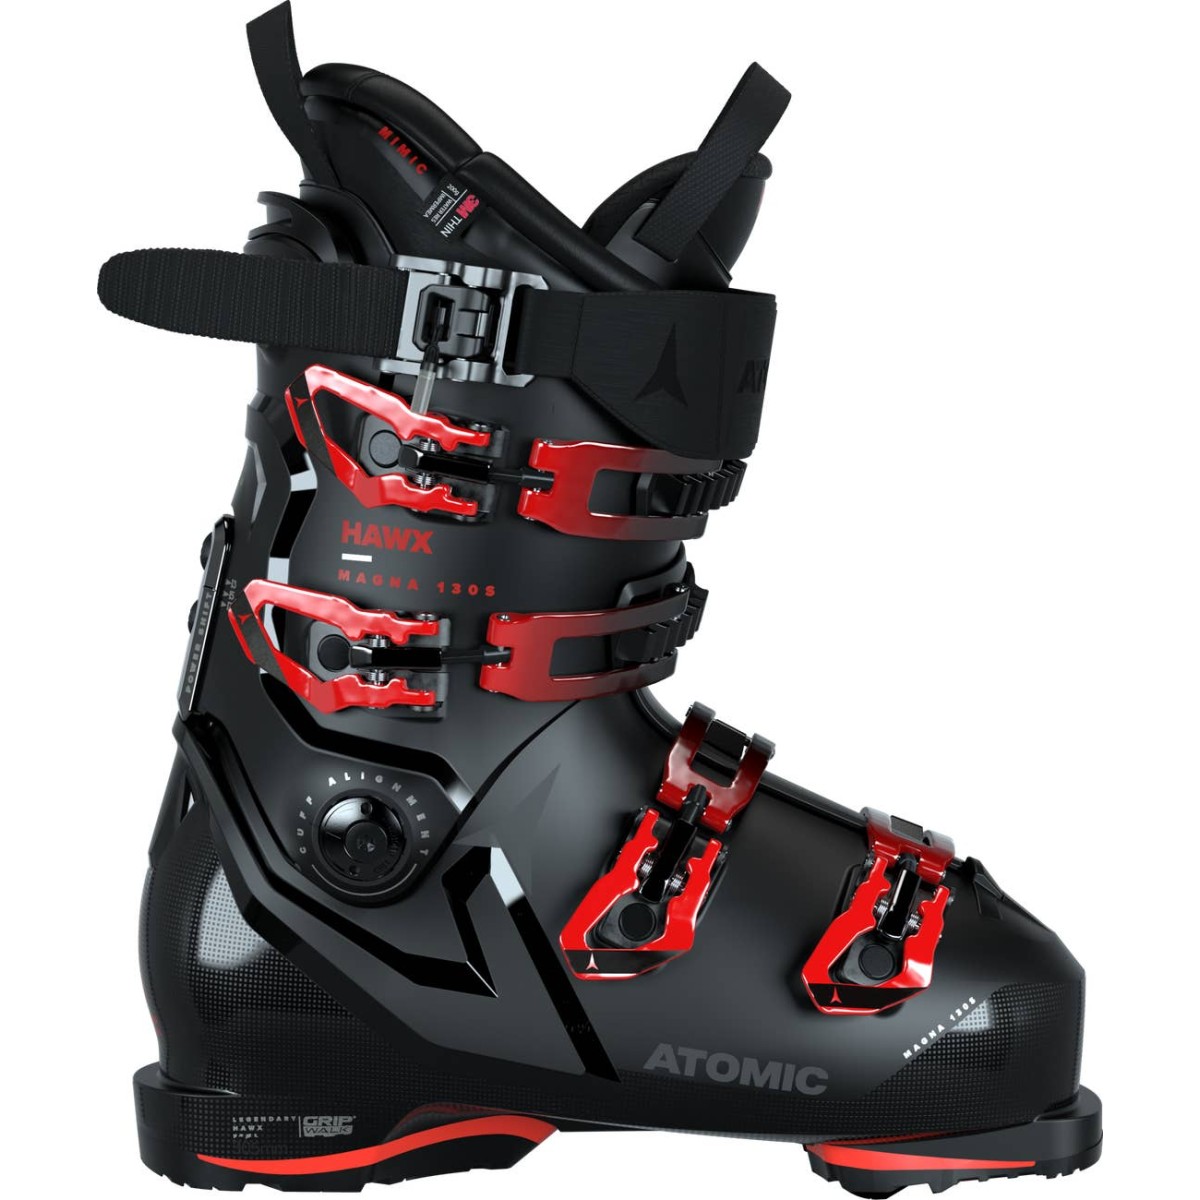 ATOMIC HAWX MAGNA 130 S GW alpine ski boots - black/red